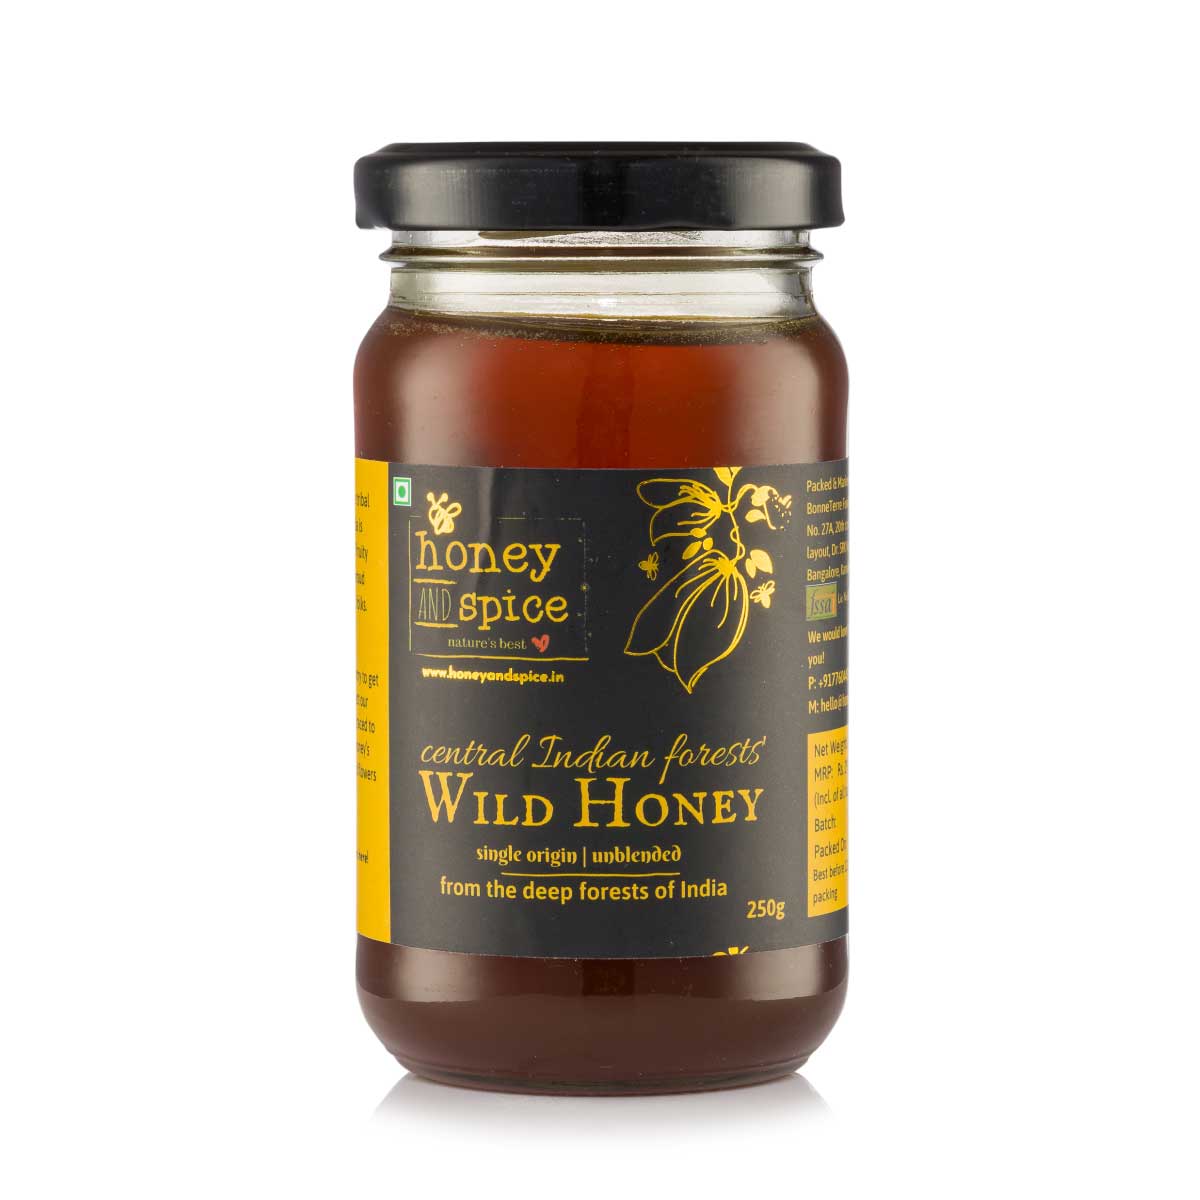 
                  
                    Honey and Spice Wild Honey - Central India (250g)
                  
                